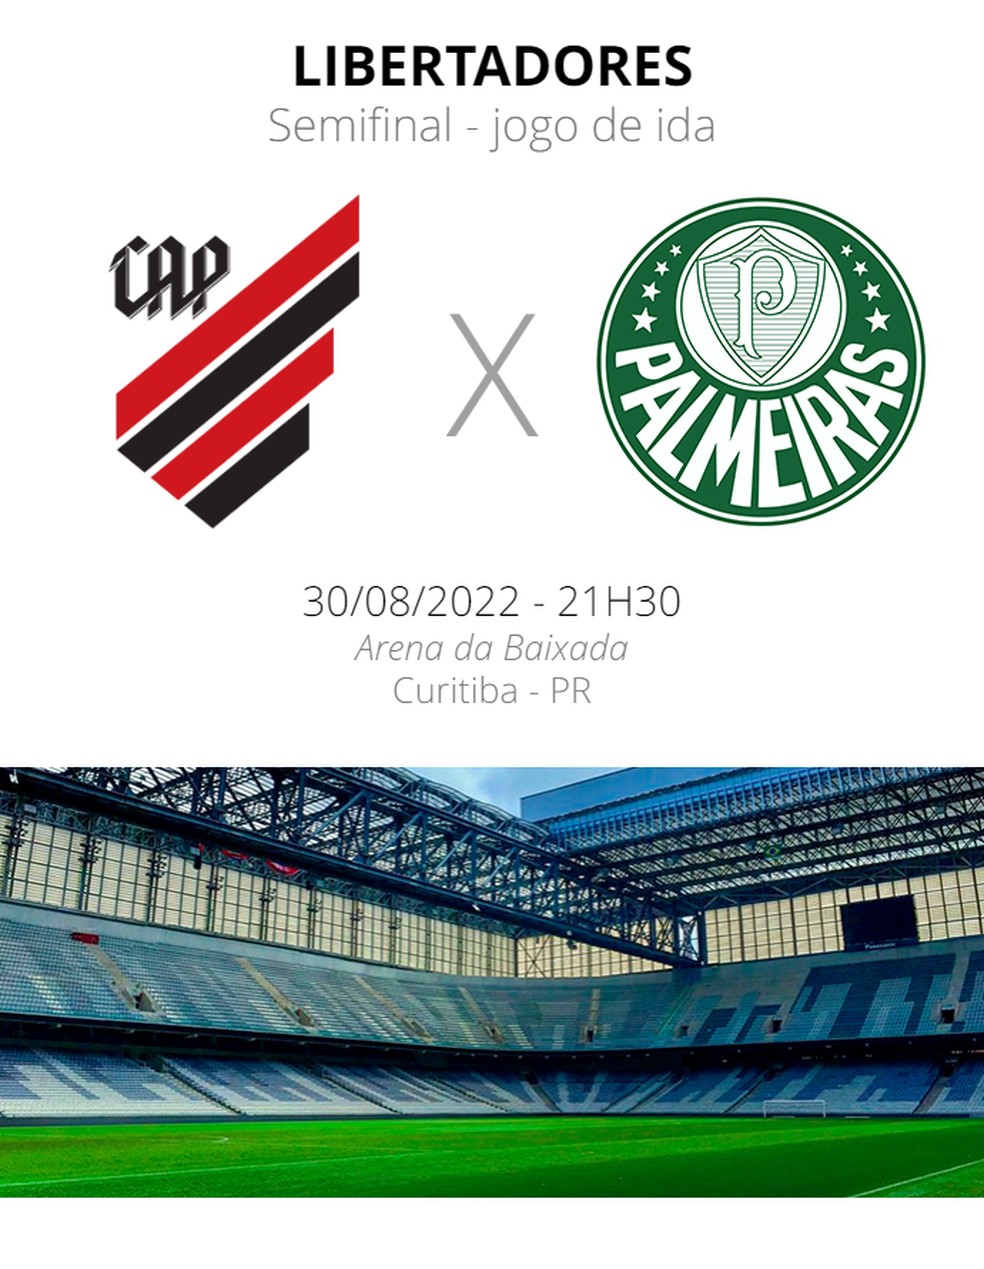 Futebol Athletico Paranaense vs Palmeiras Semifinal da Copa